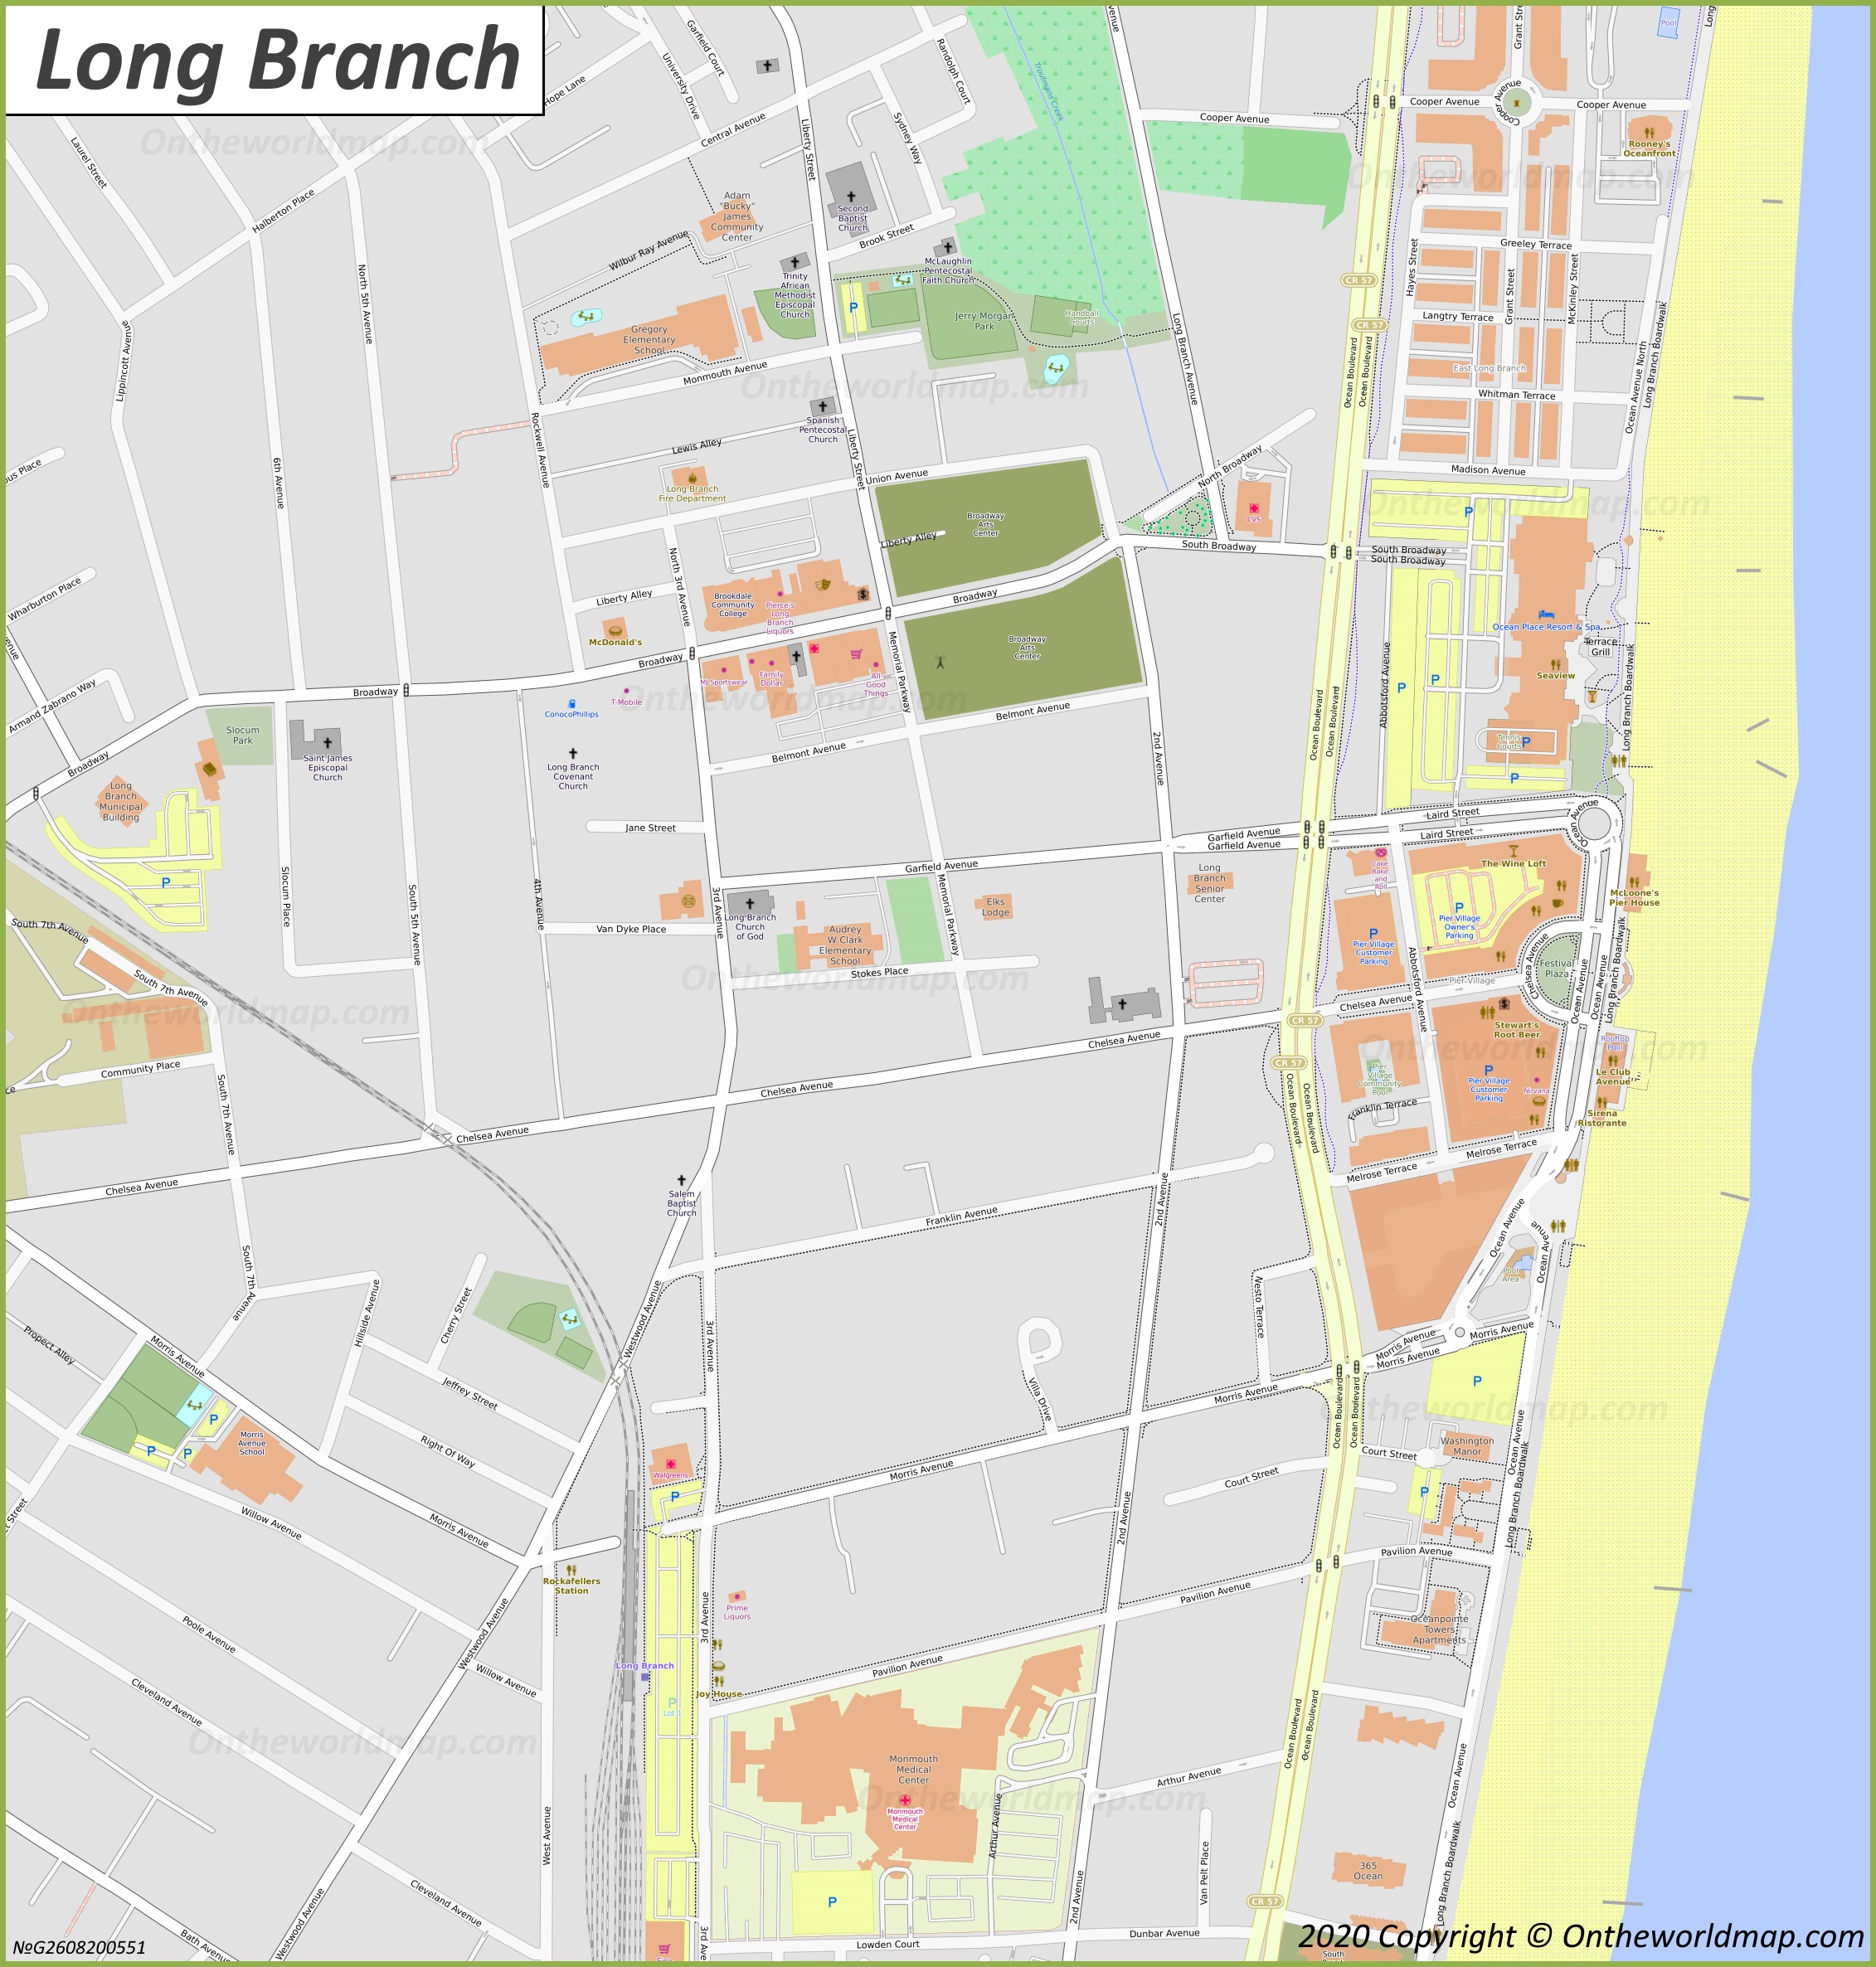 https://ontheworldmap.com/usa/city/long-branch/long-branch-downtown-map.jpg